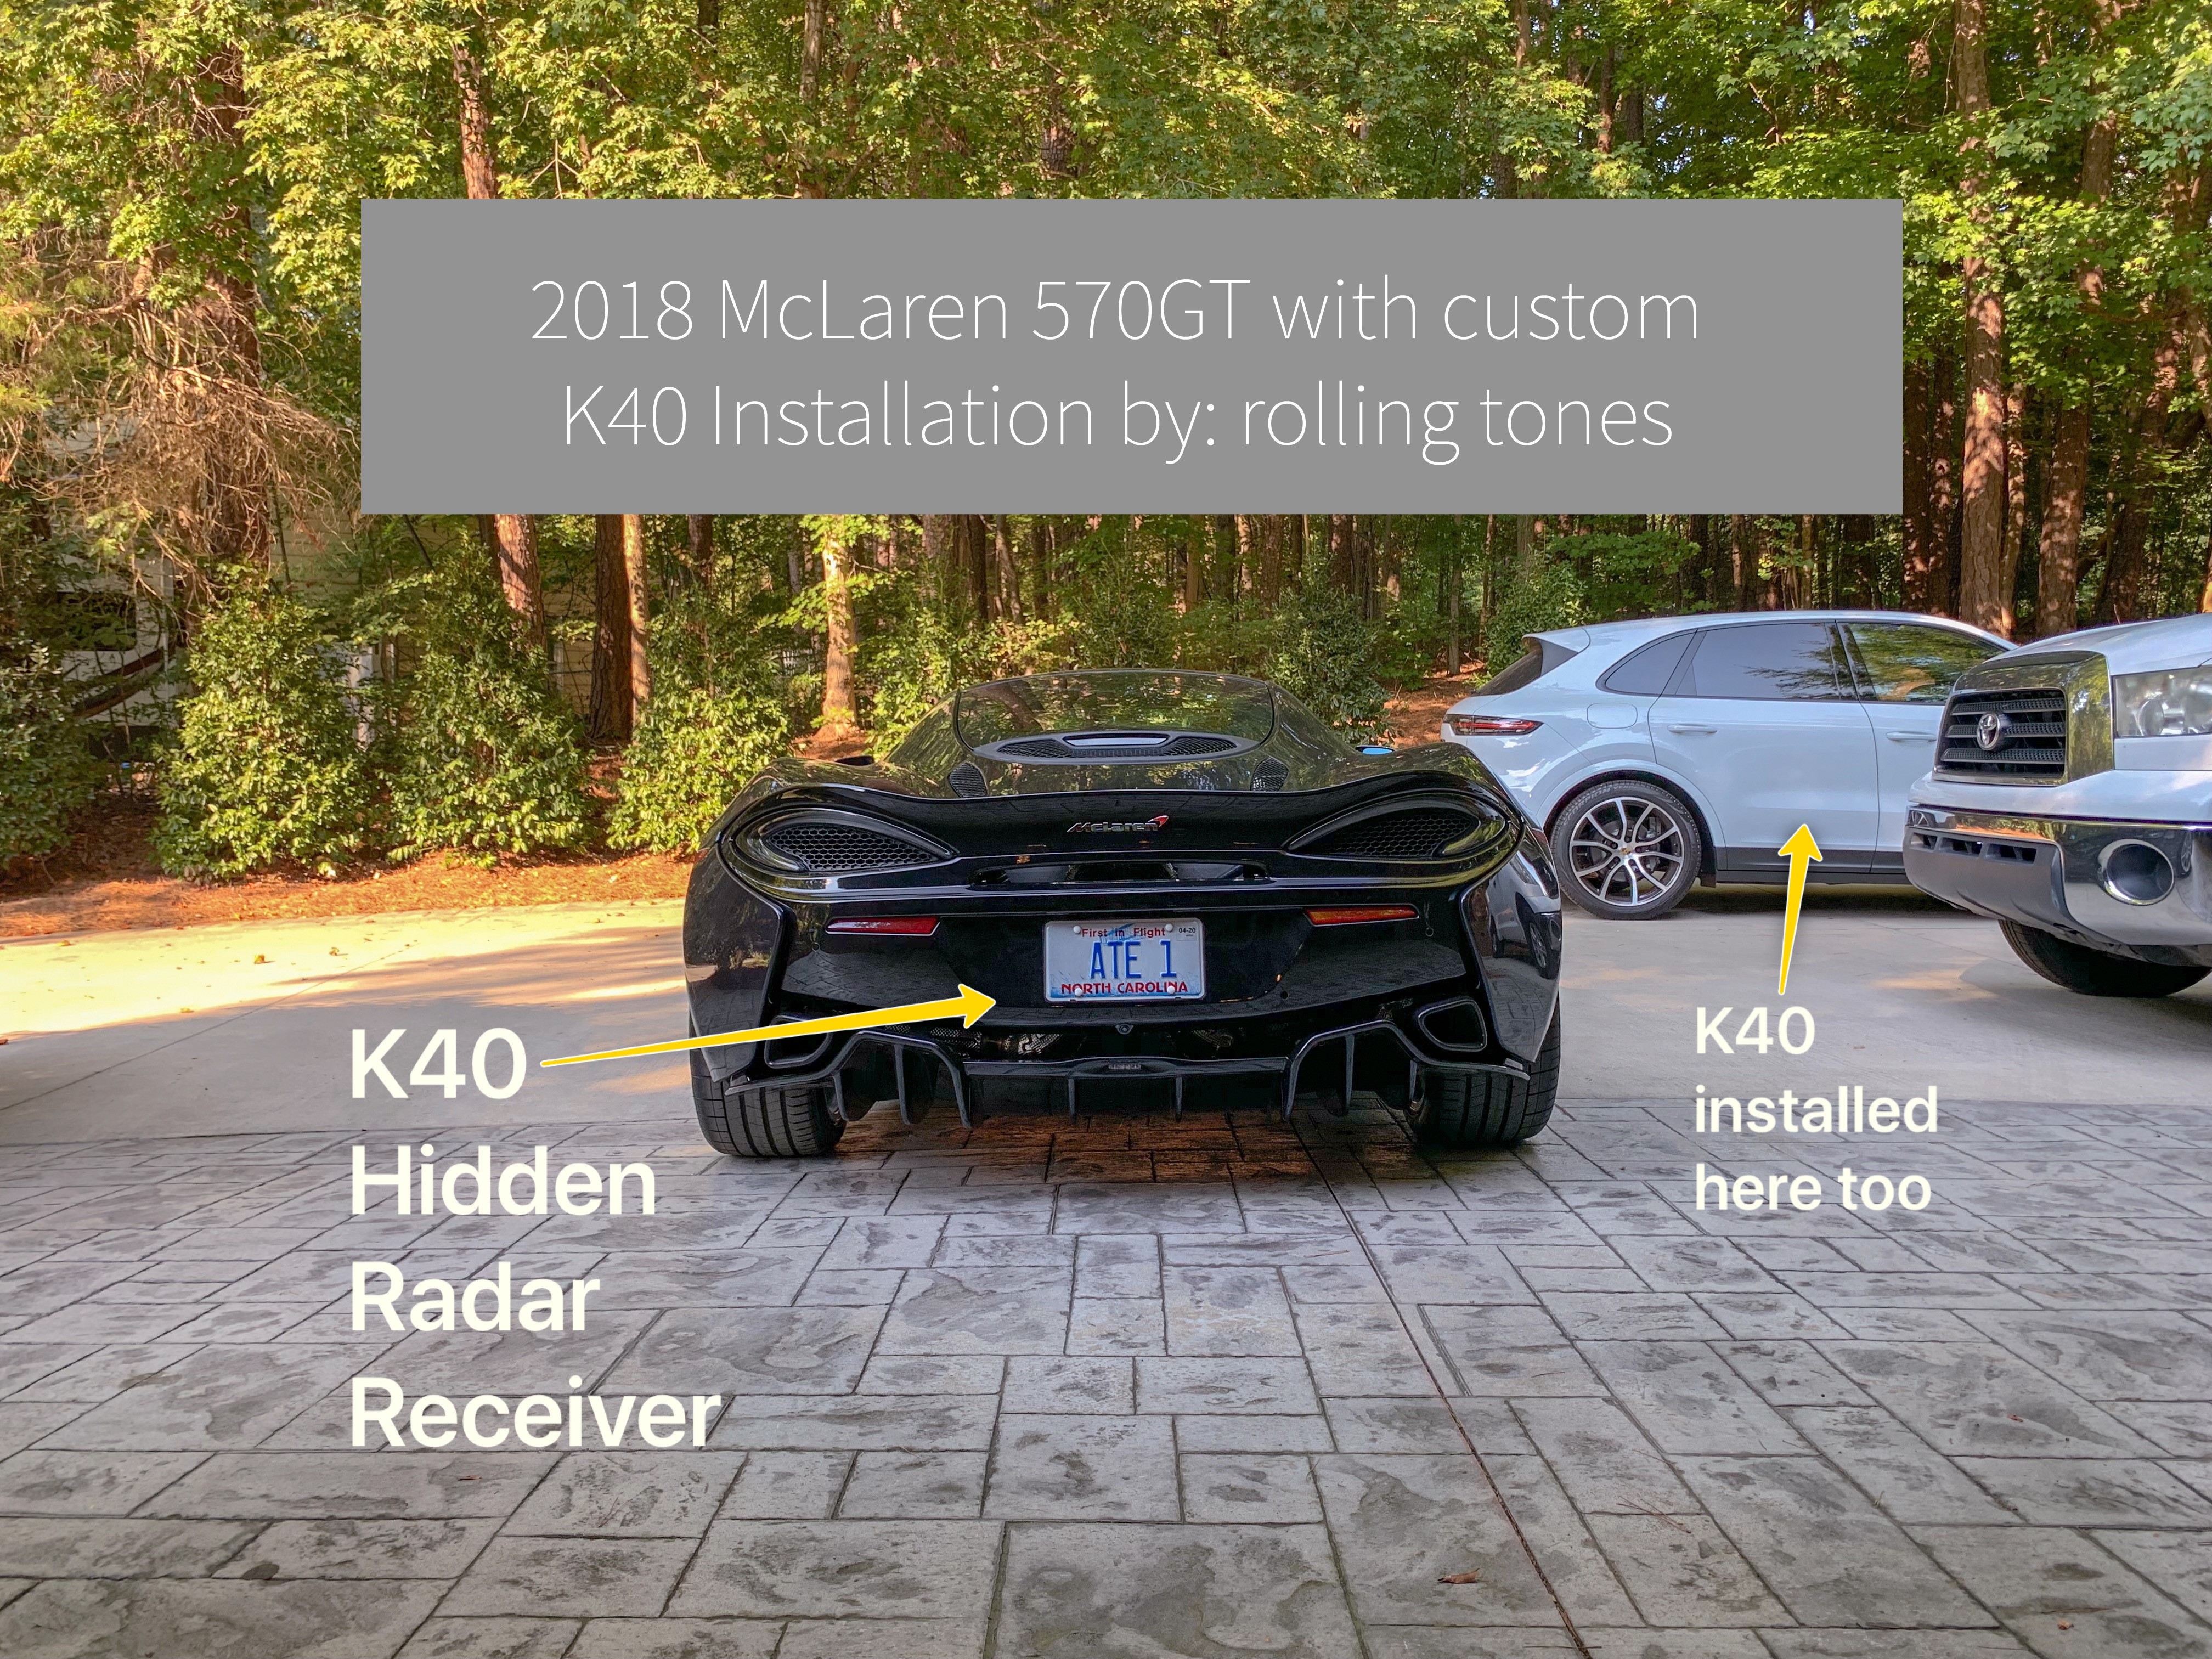 K40 Hidden Radar Receiver on a 2018 McLaren 570GT in Concord, NC